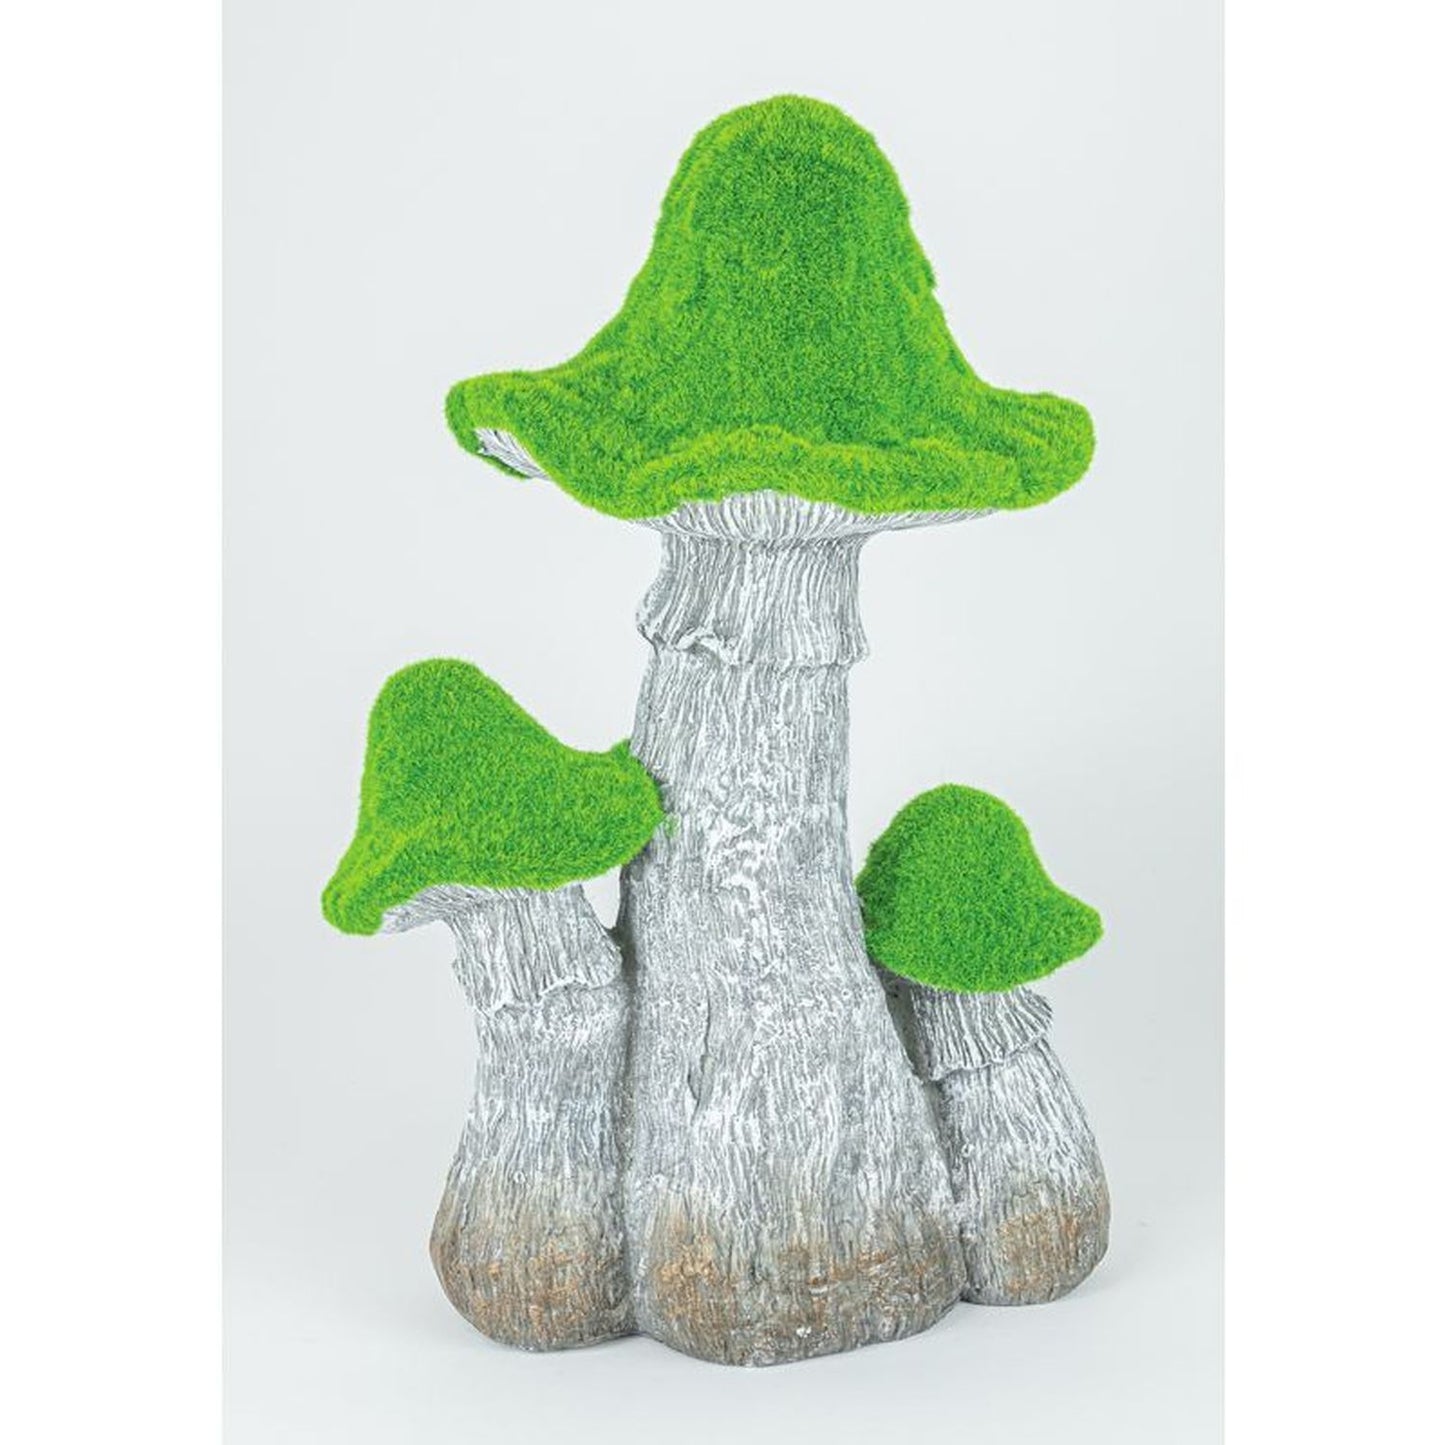 Hanna's Handiworks Mossy Top Mushrooms